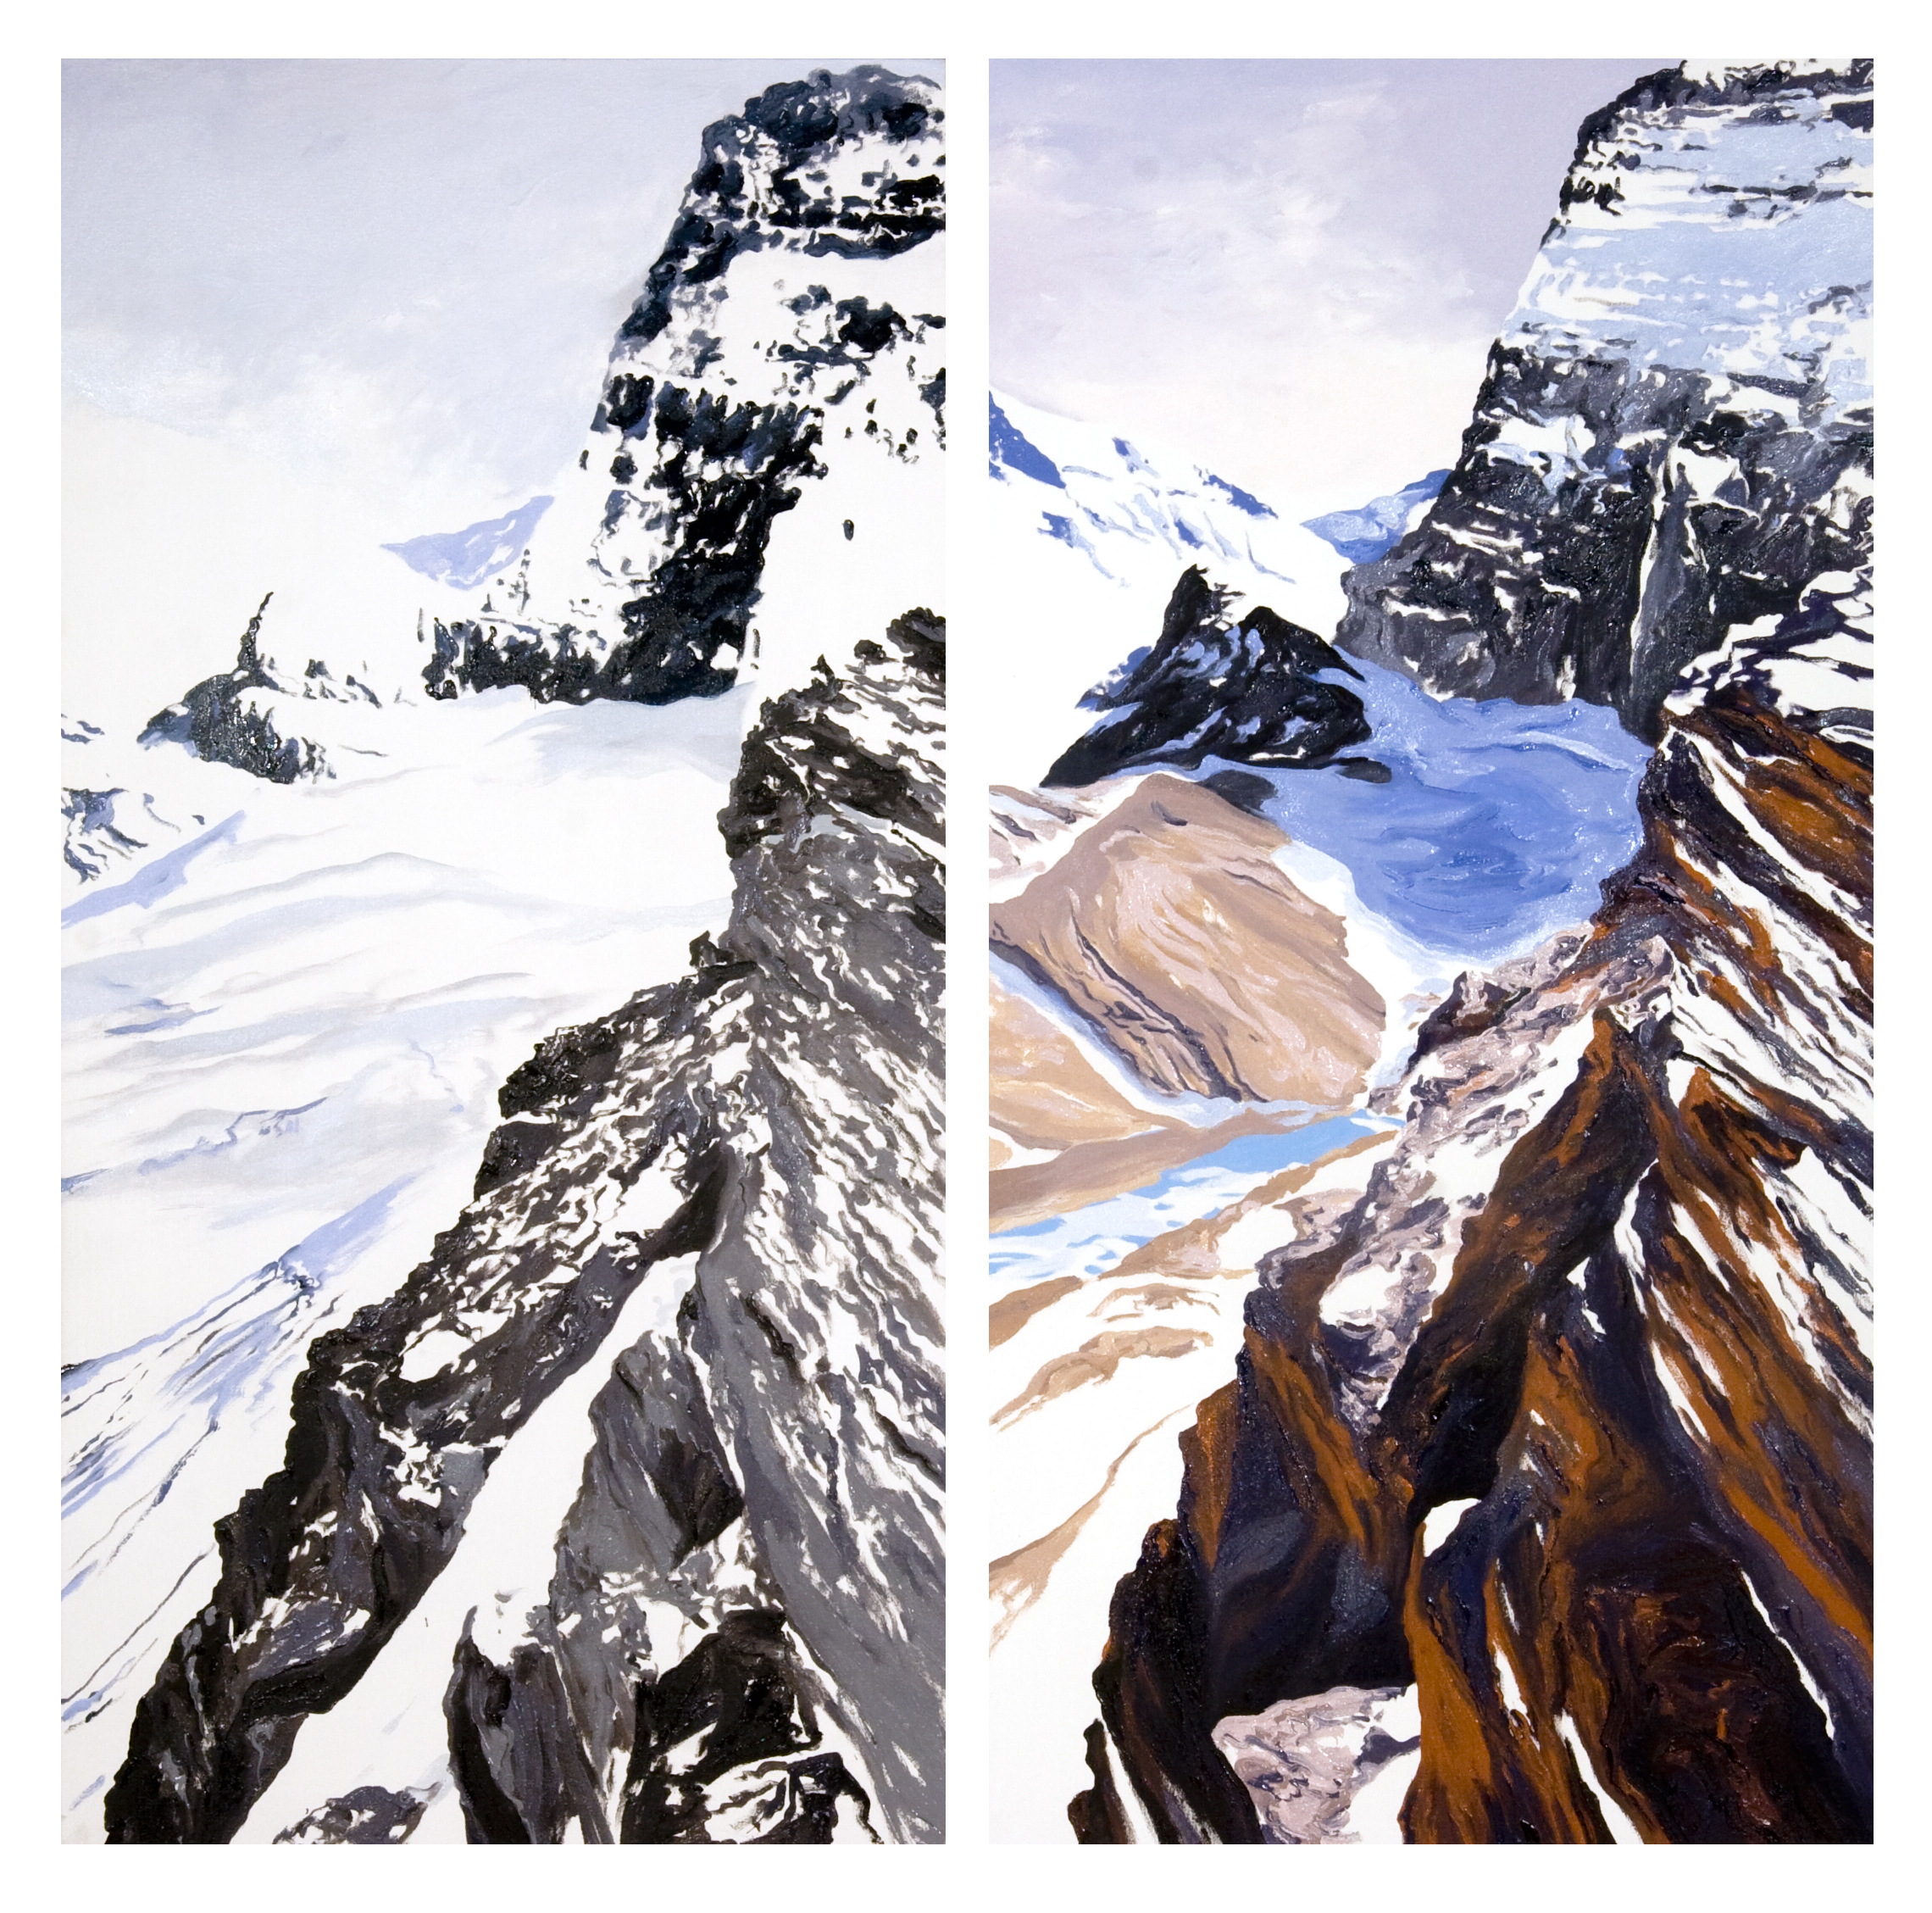 Grinnell Glacier Overlook #3, #4